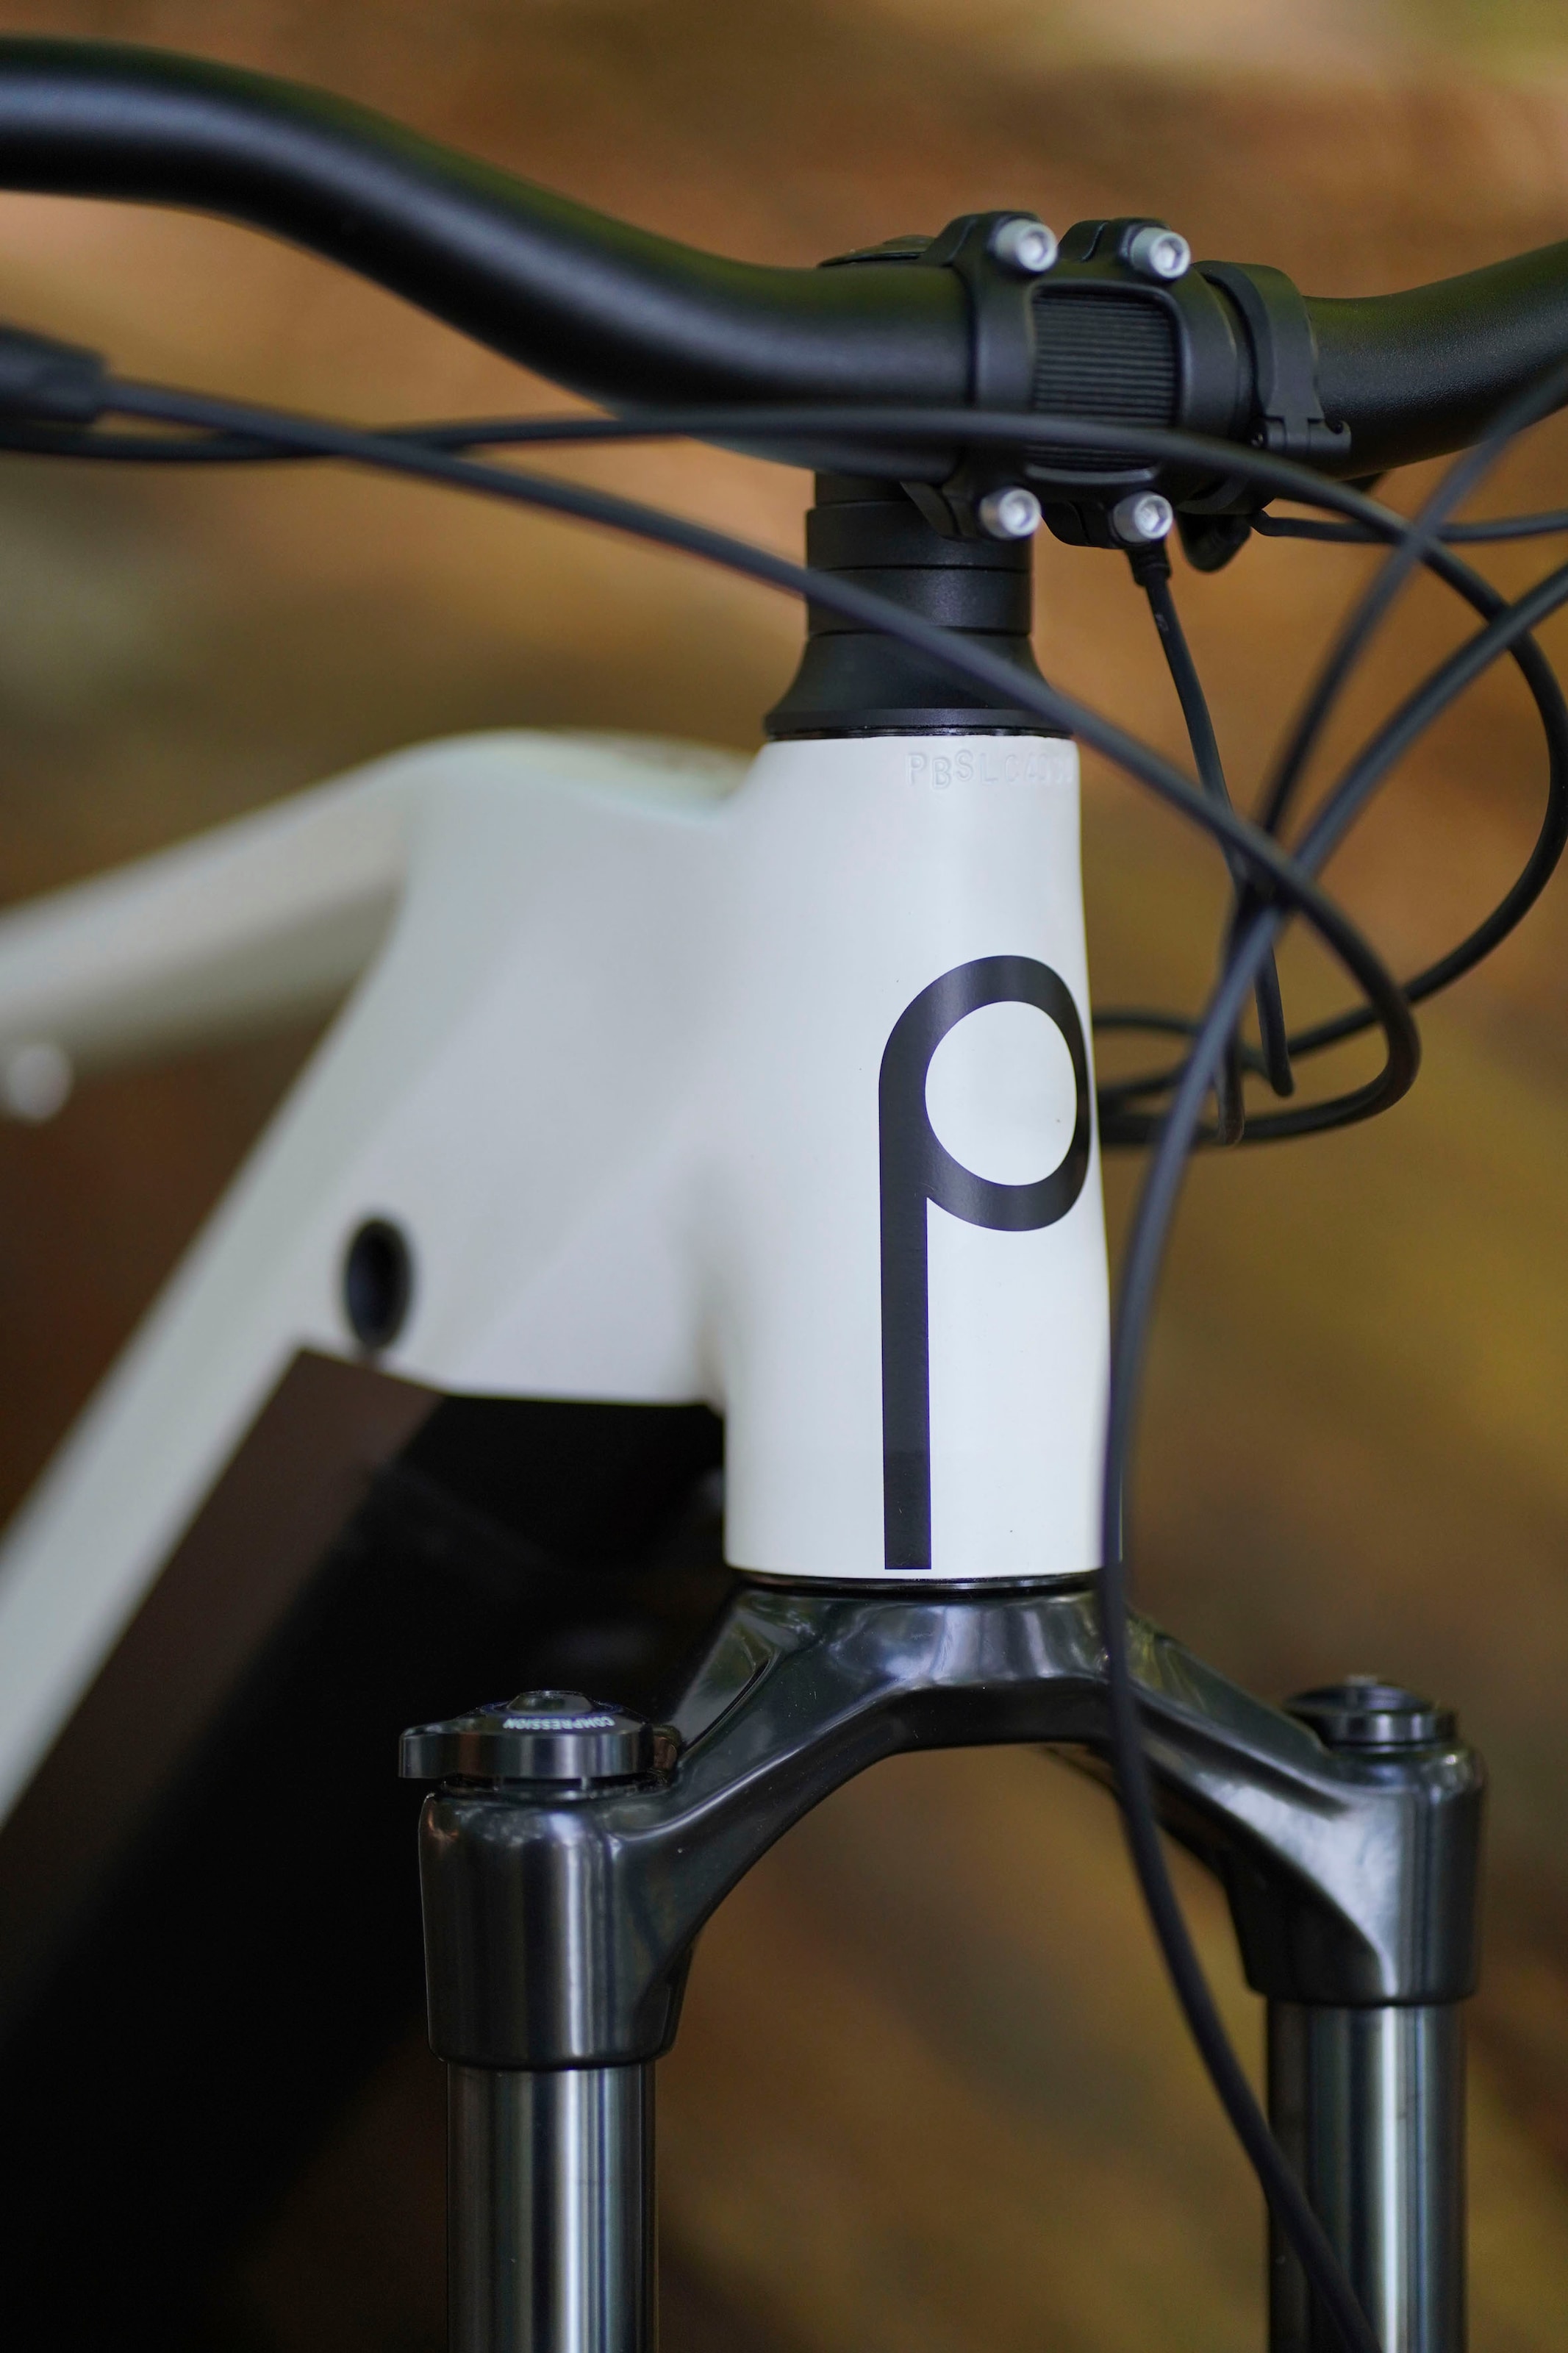 Prophete E-Bike »DICE 5.0«, 12 Gang, Shimano, Mittelmotor 250 W